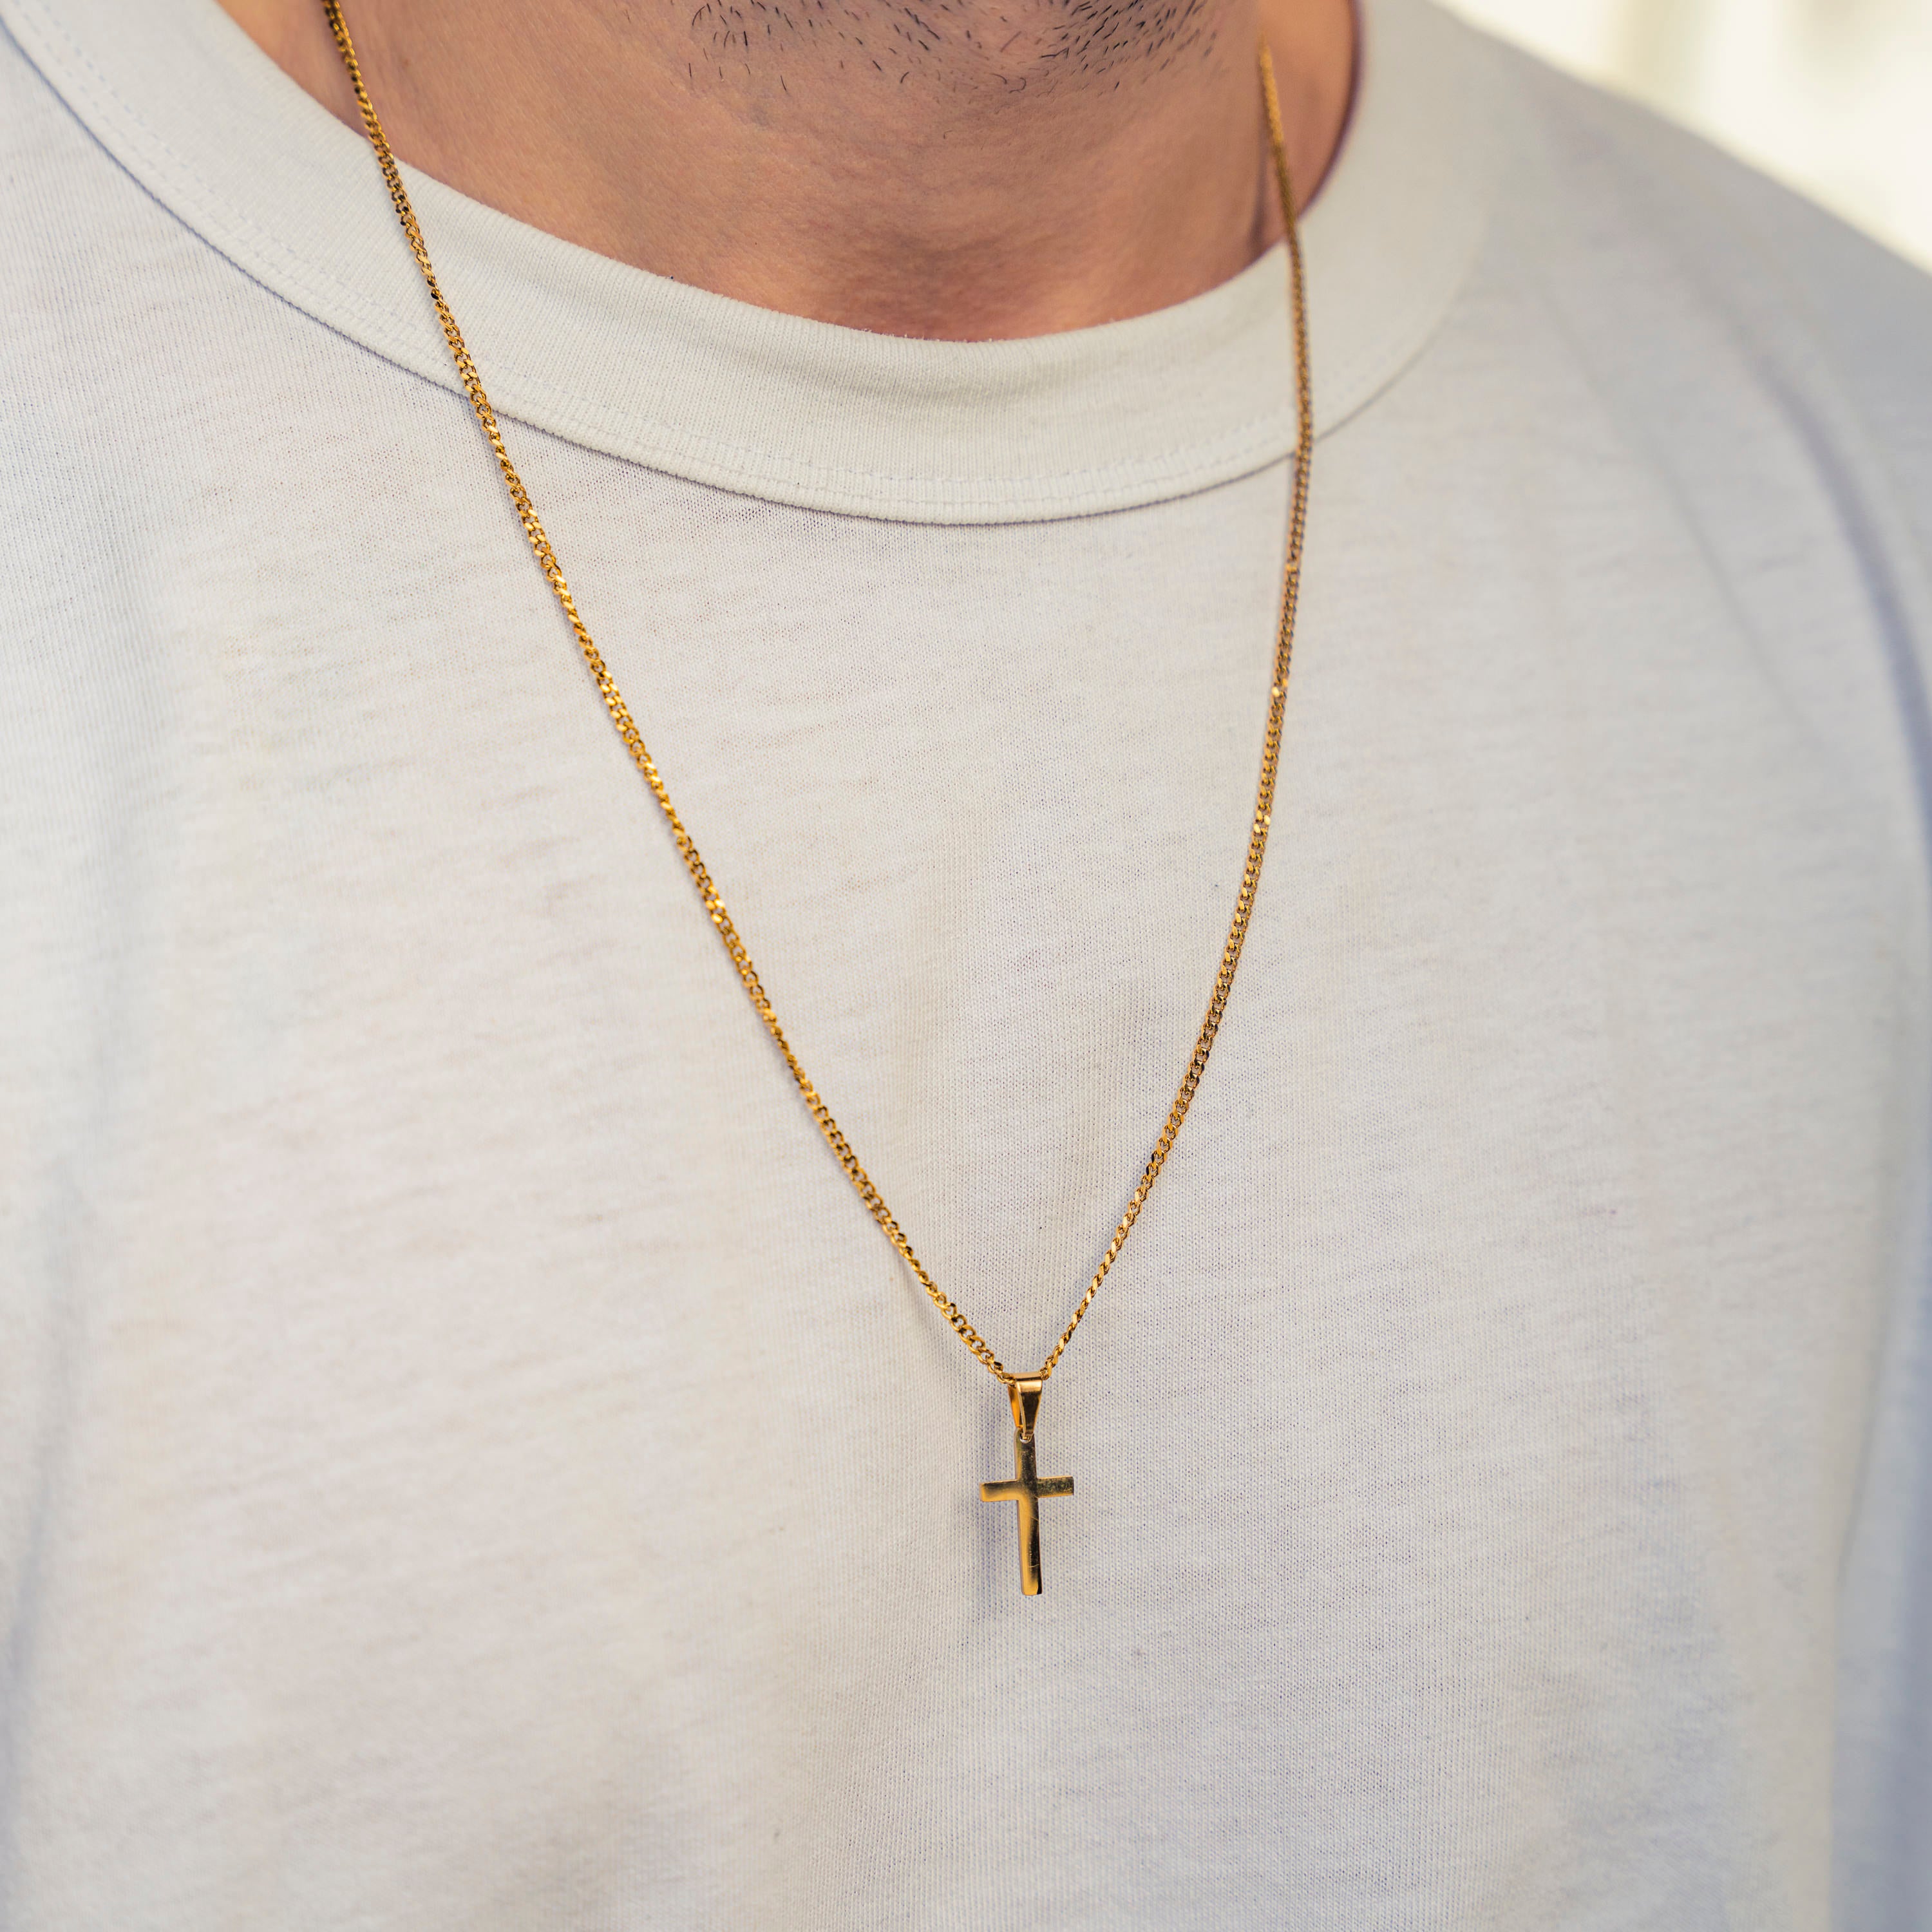 Surfer Necklace - Golden Cross